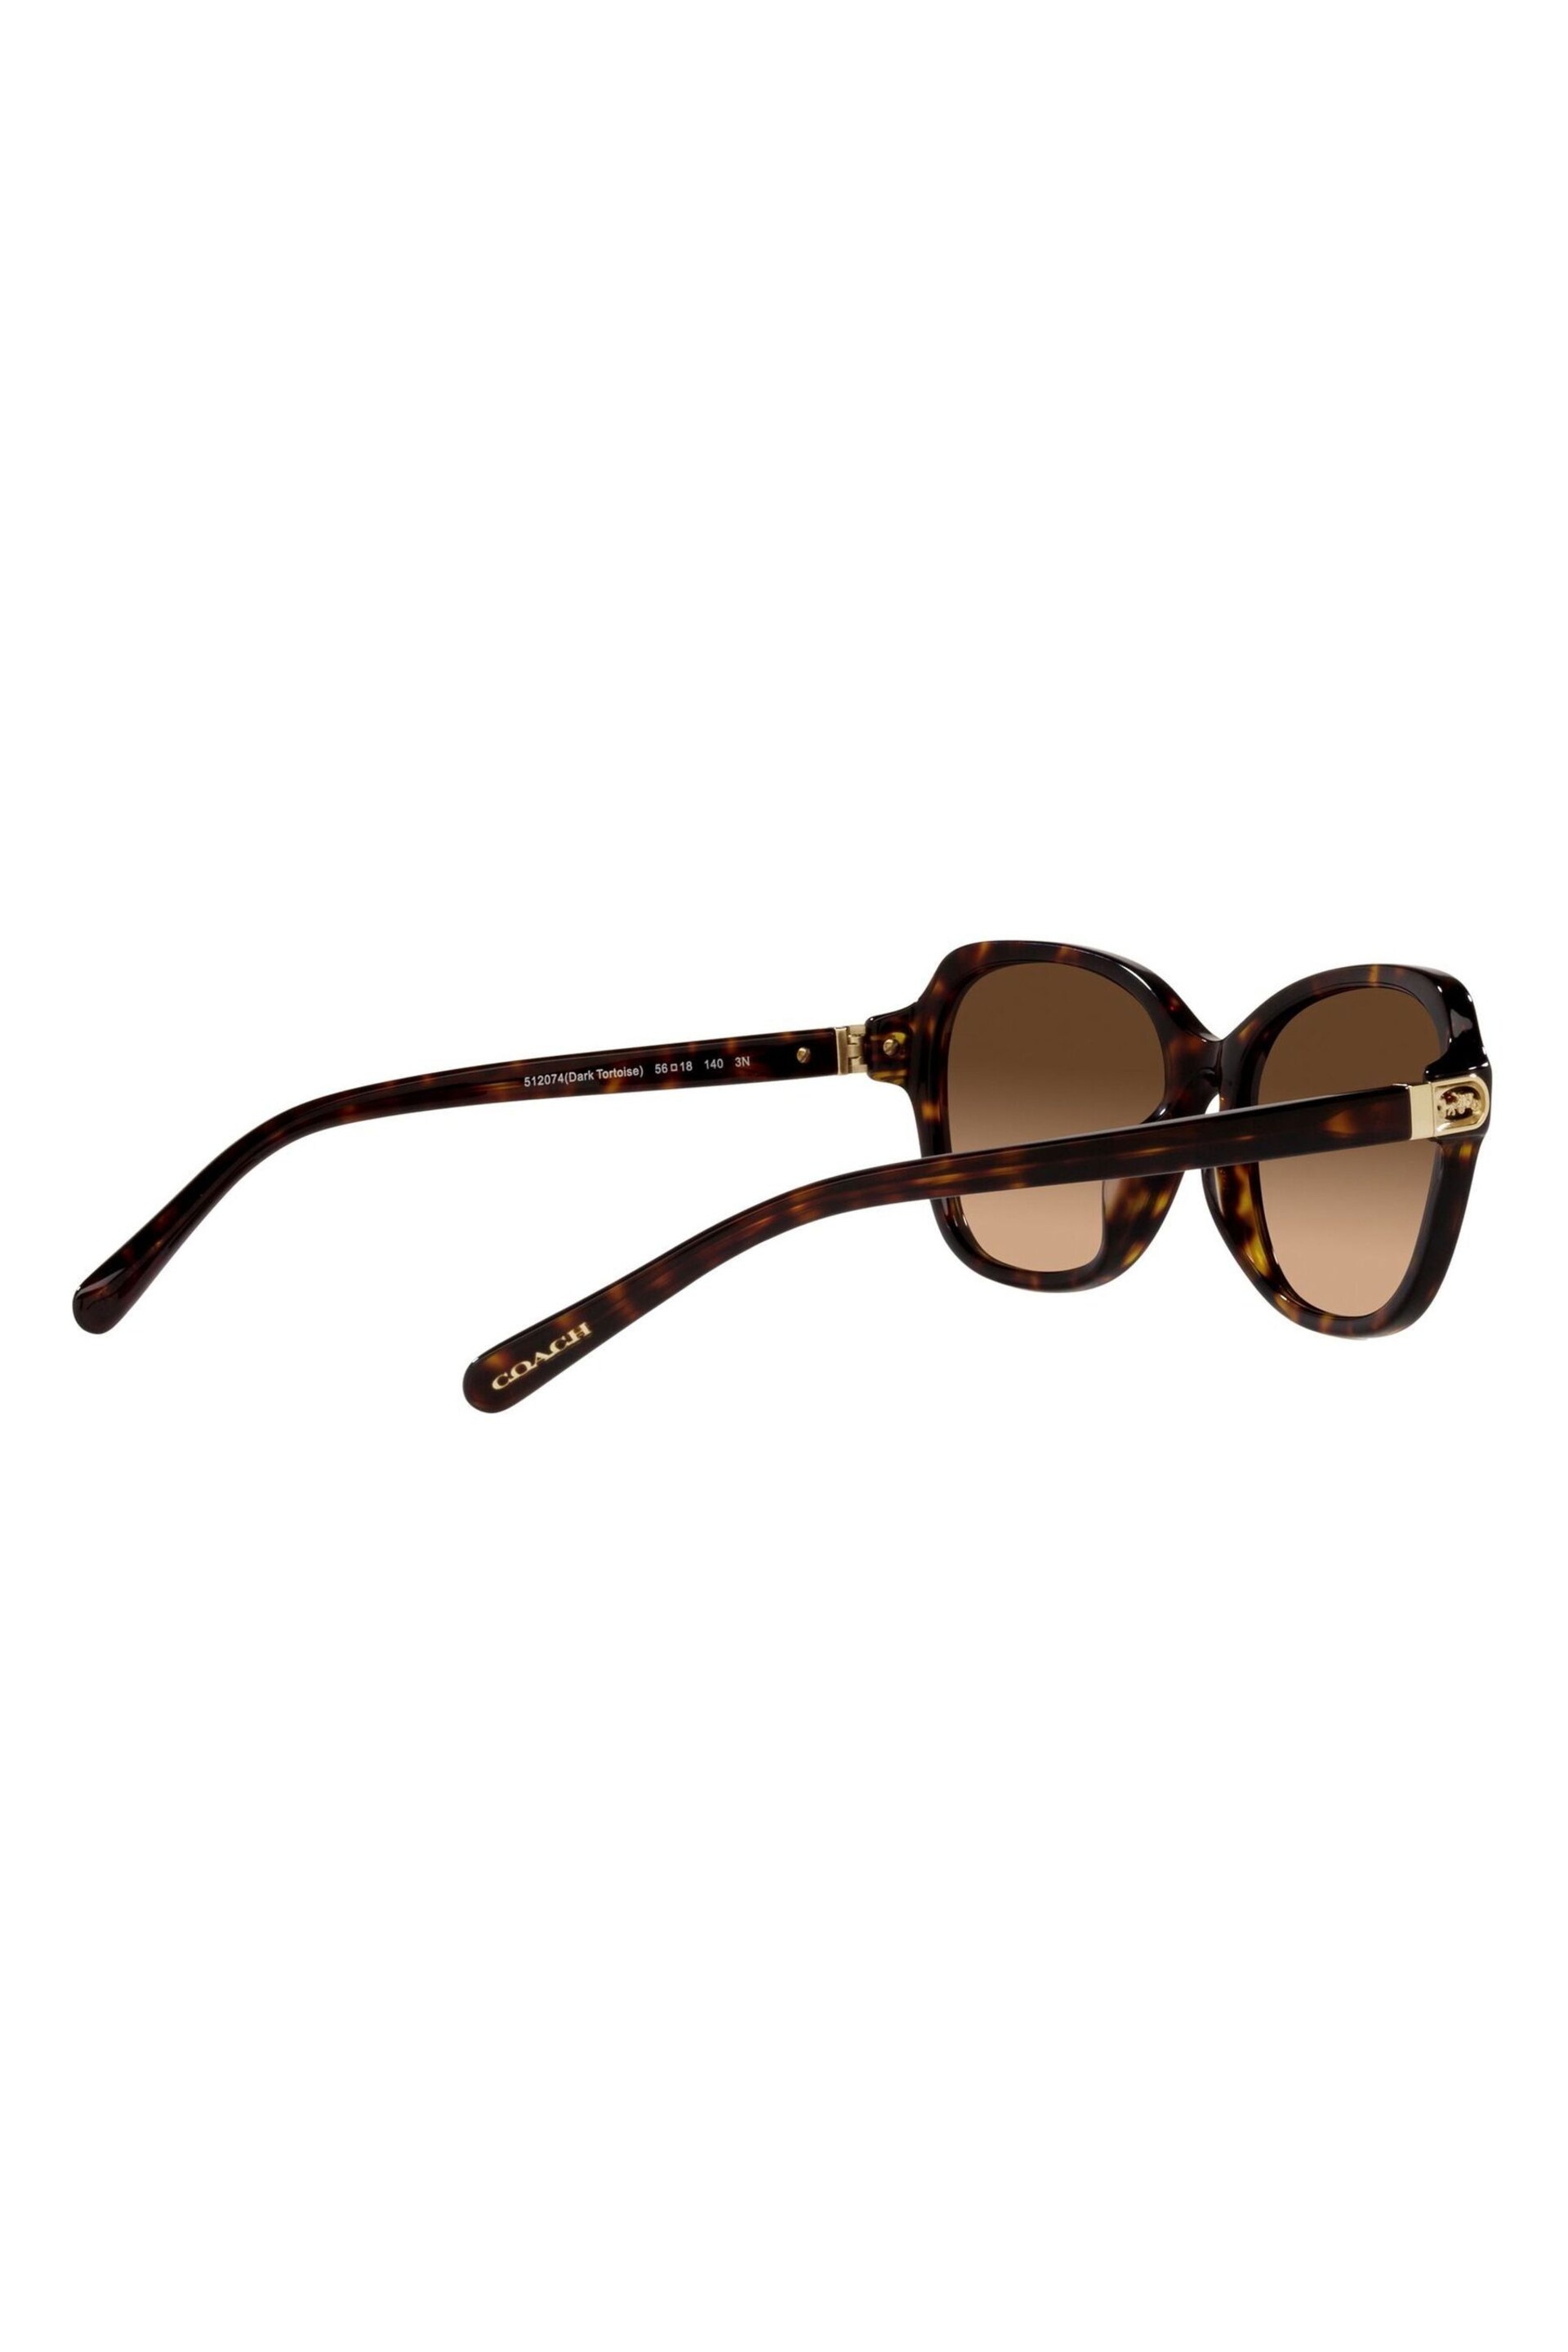 COACH Brown 0HC8349U Sunglasses - Image 6 of 14